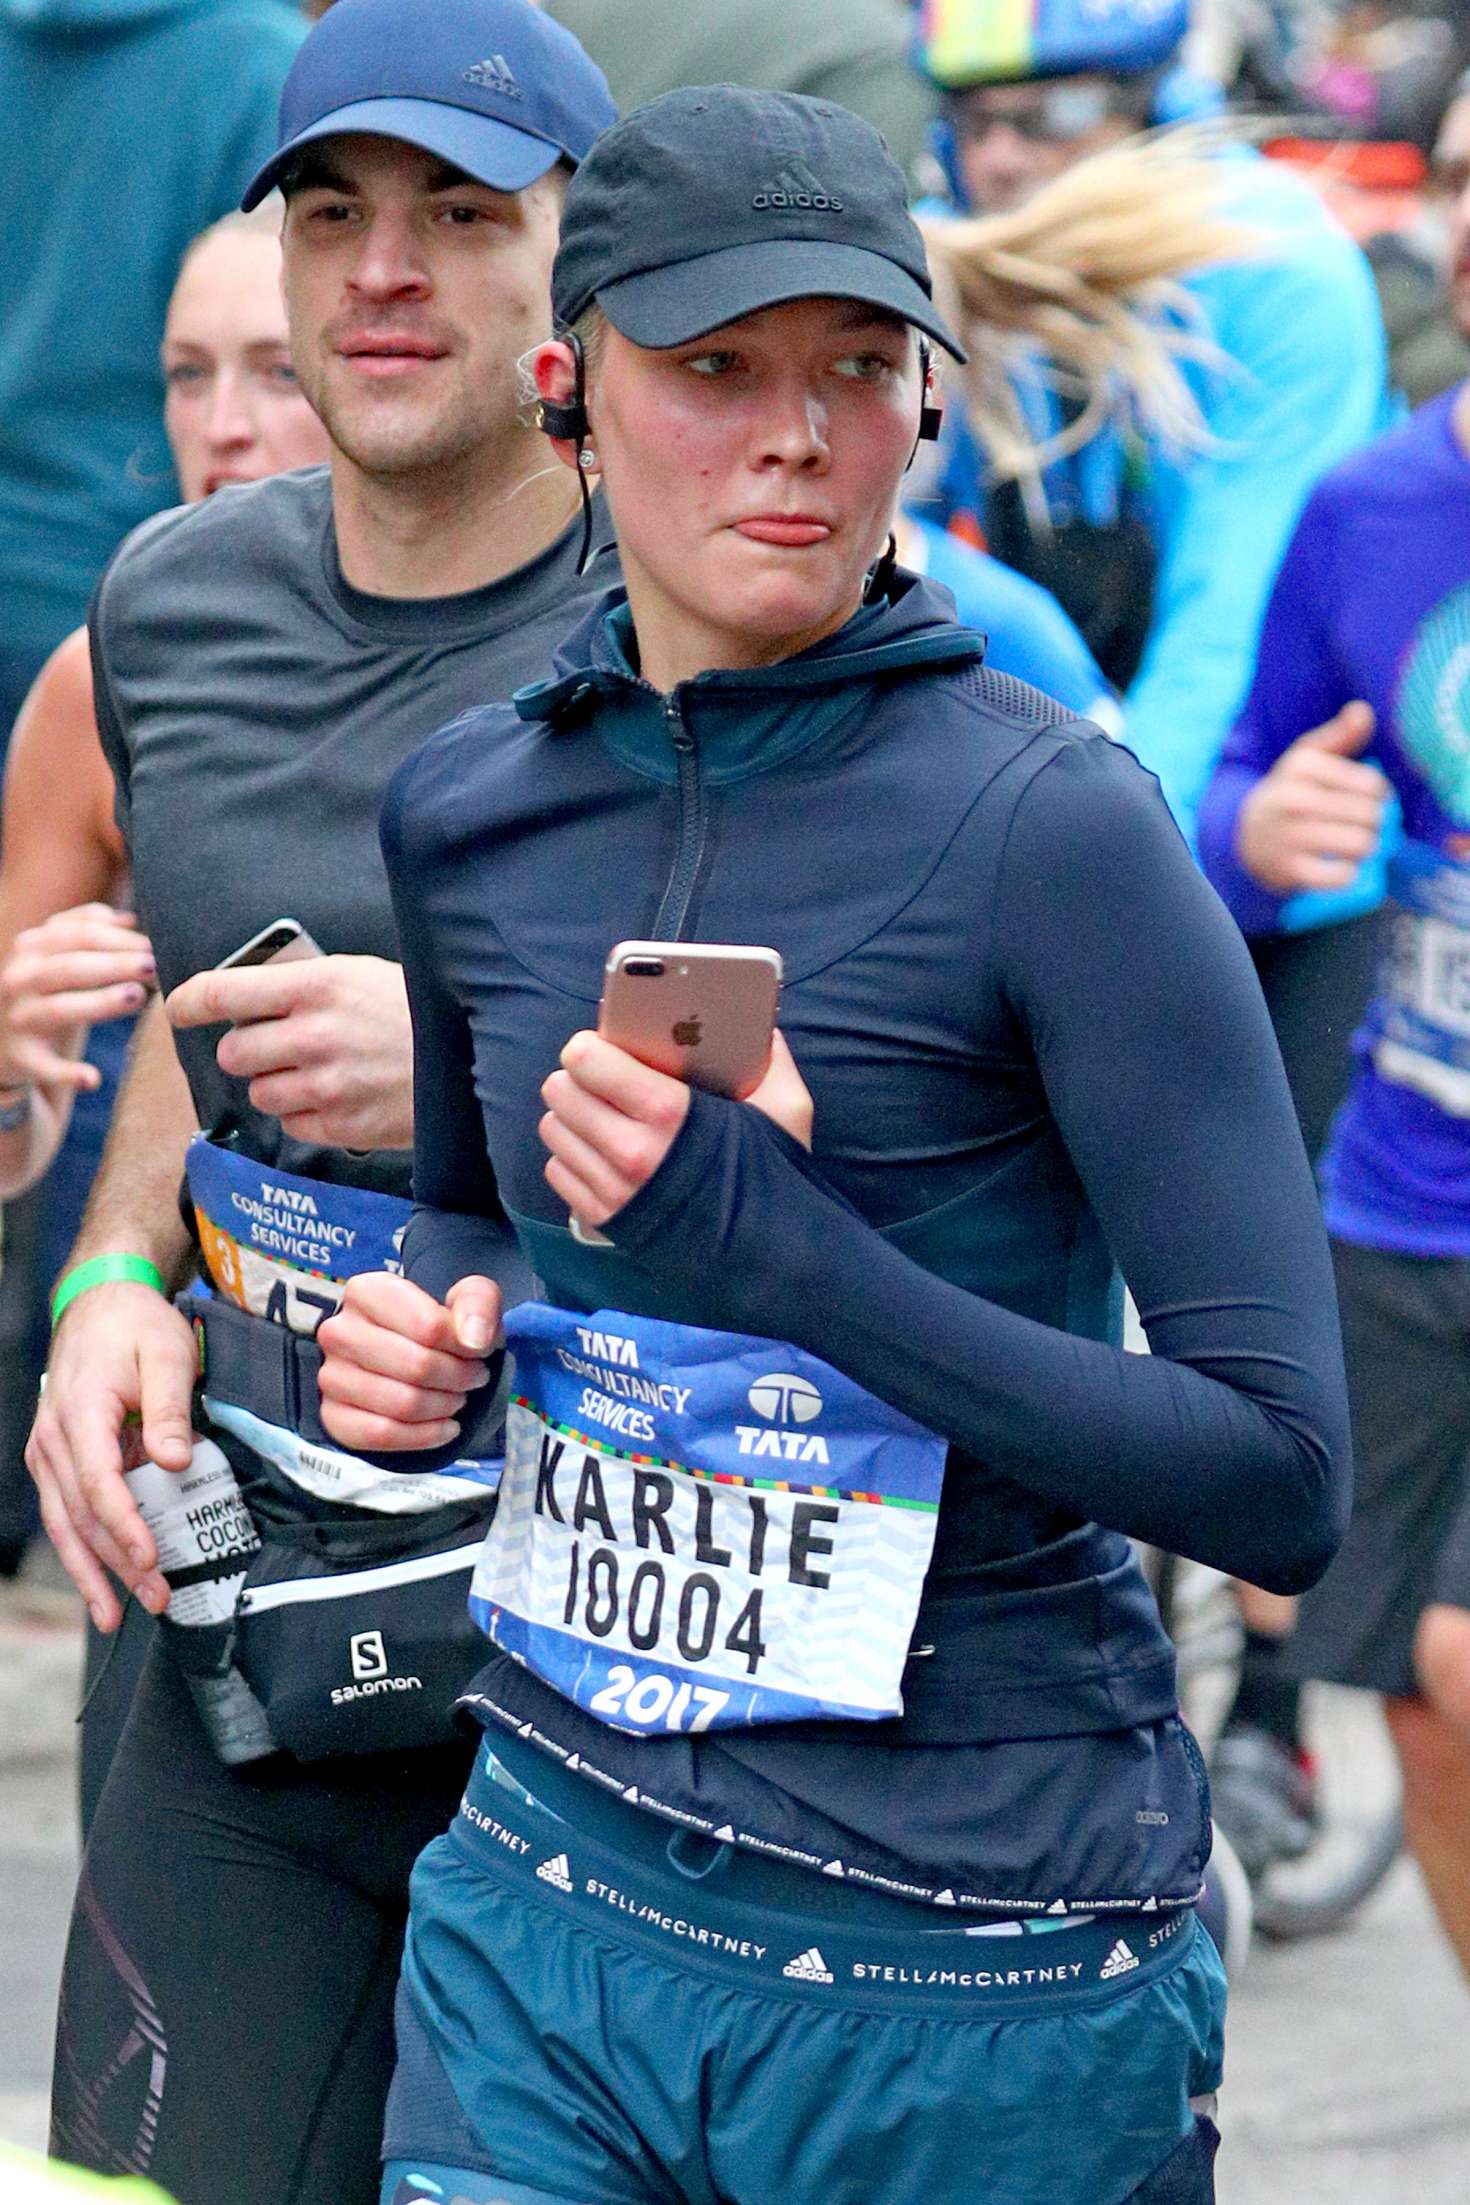 Karlie Kloss - Running the New York Marathon in NYC